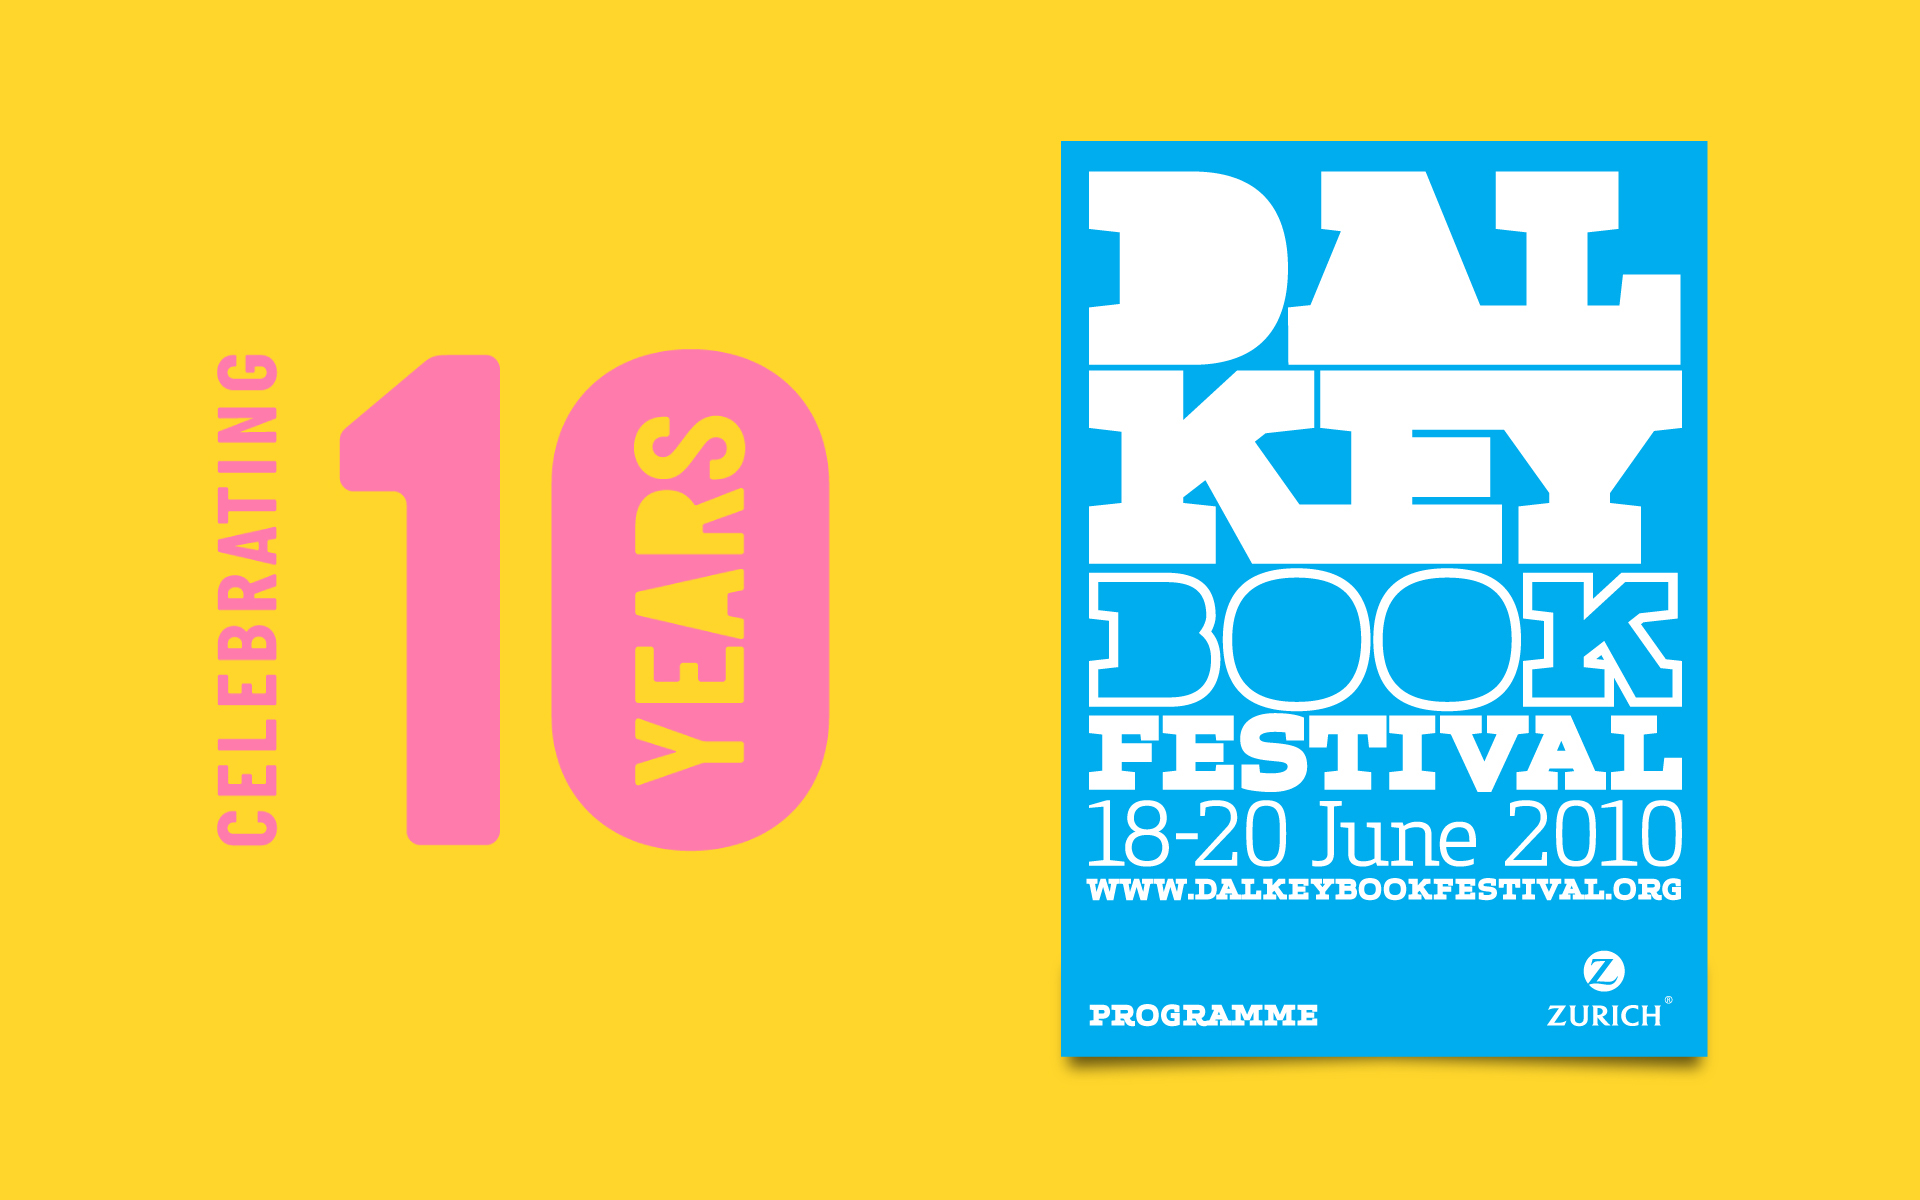 Dalkey Book Festival programme design